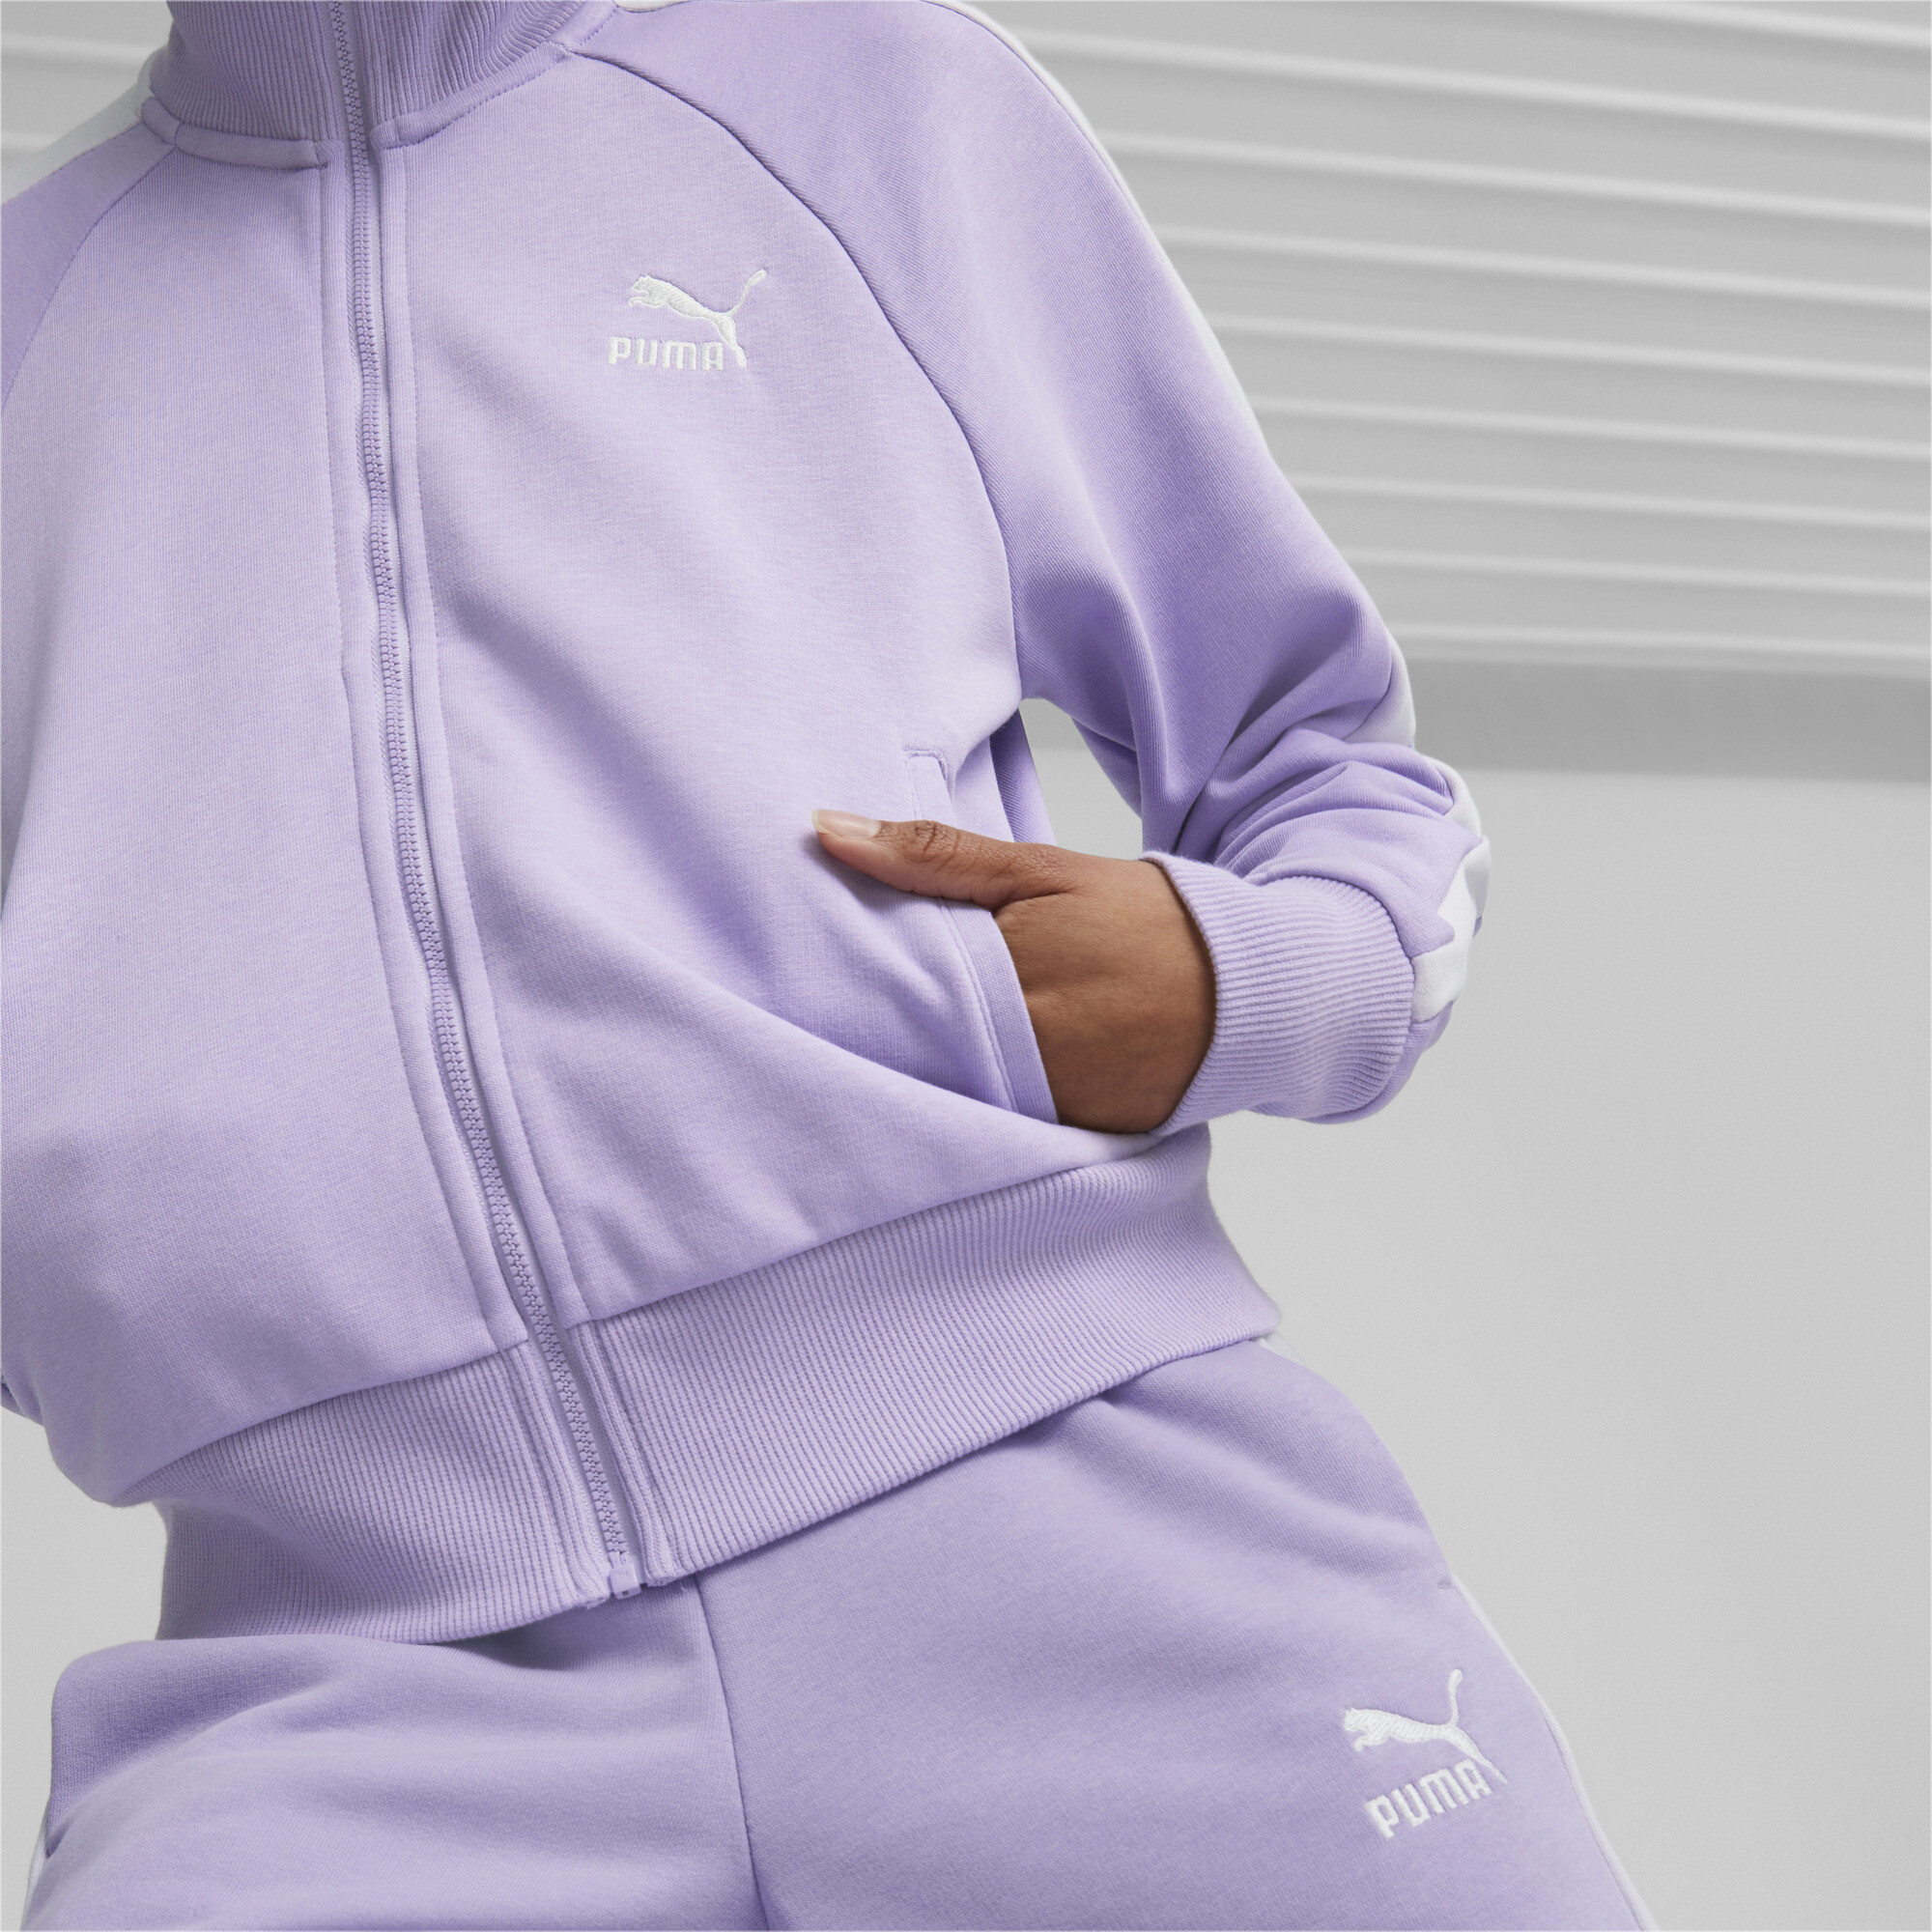 Women's Puma Iconic T7's Track Jacket, Purple, Size S, Clothing